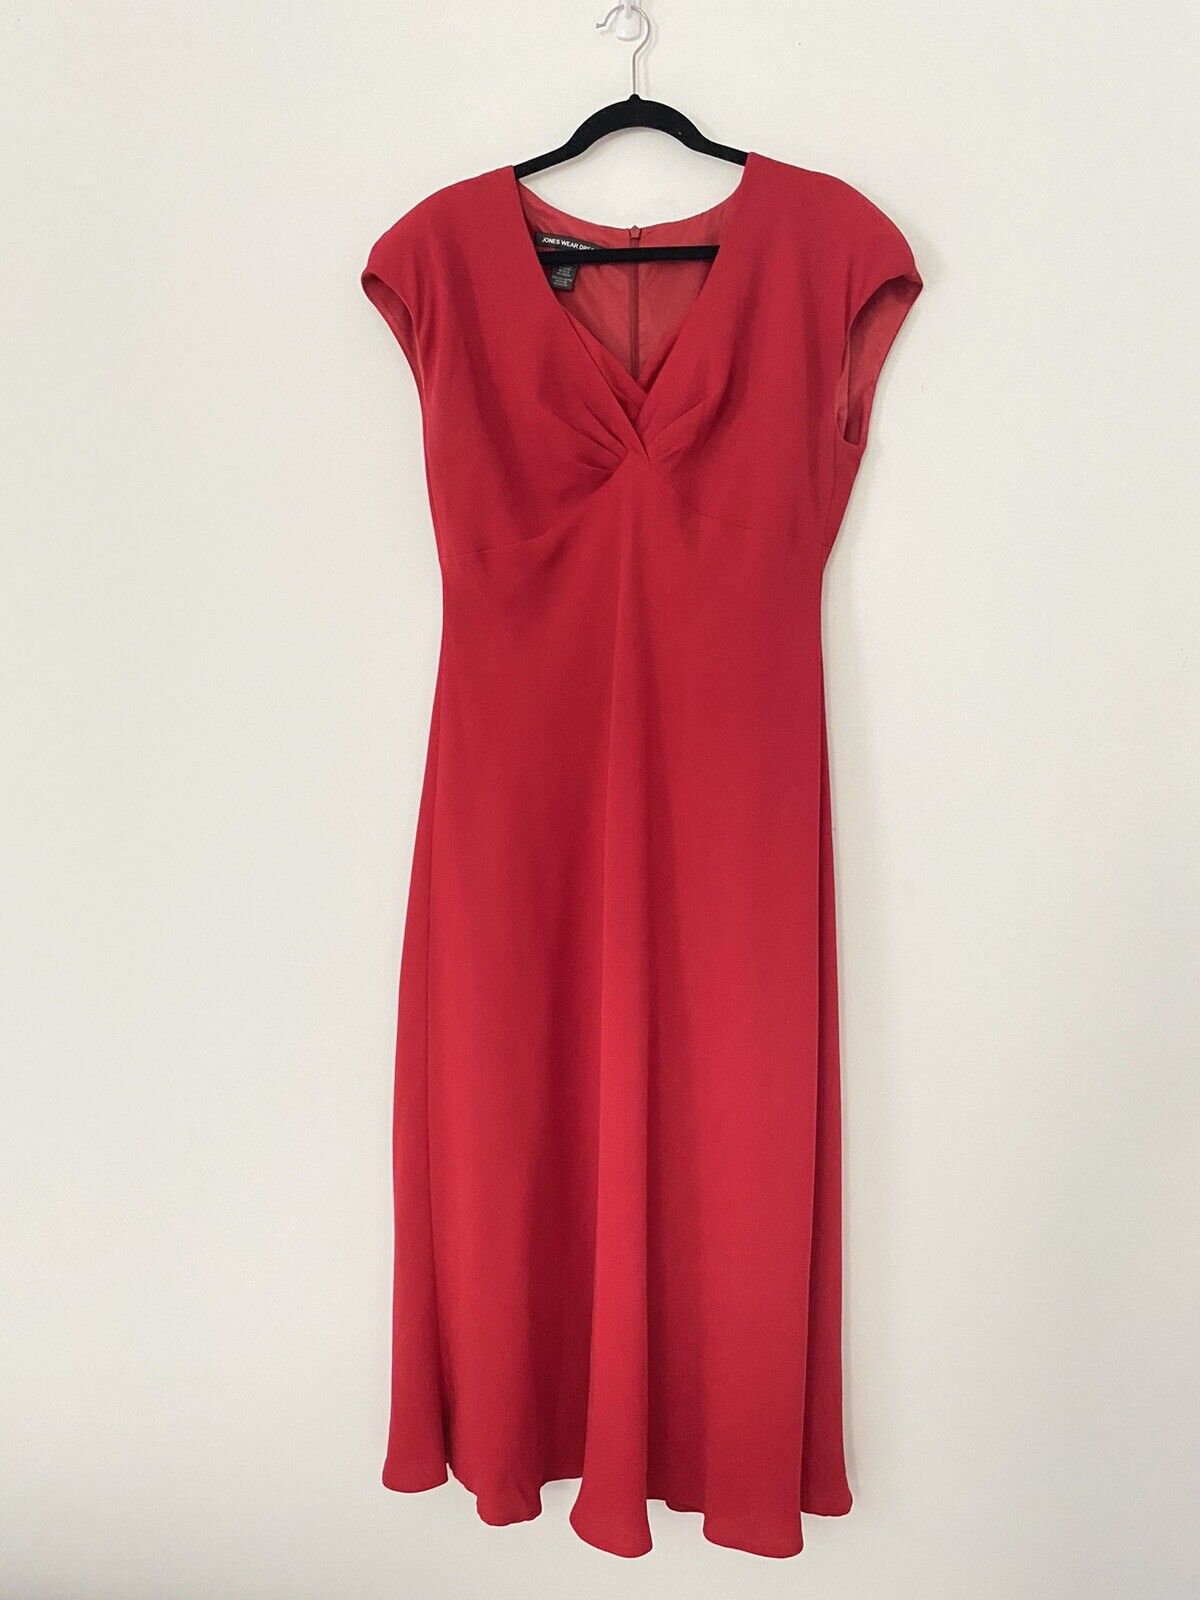 Jones Wear Dress Red Size 16 Women Sleeveless Business Career Formal ...